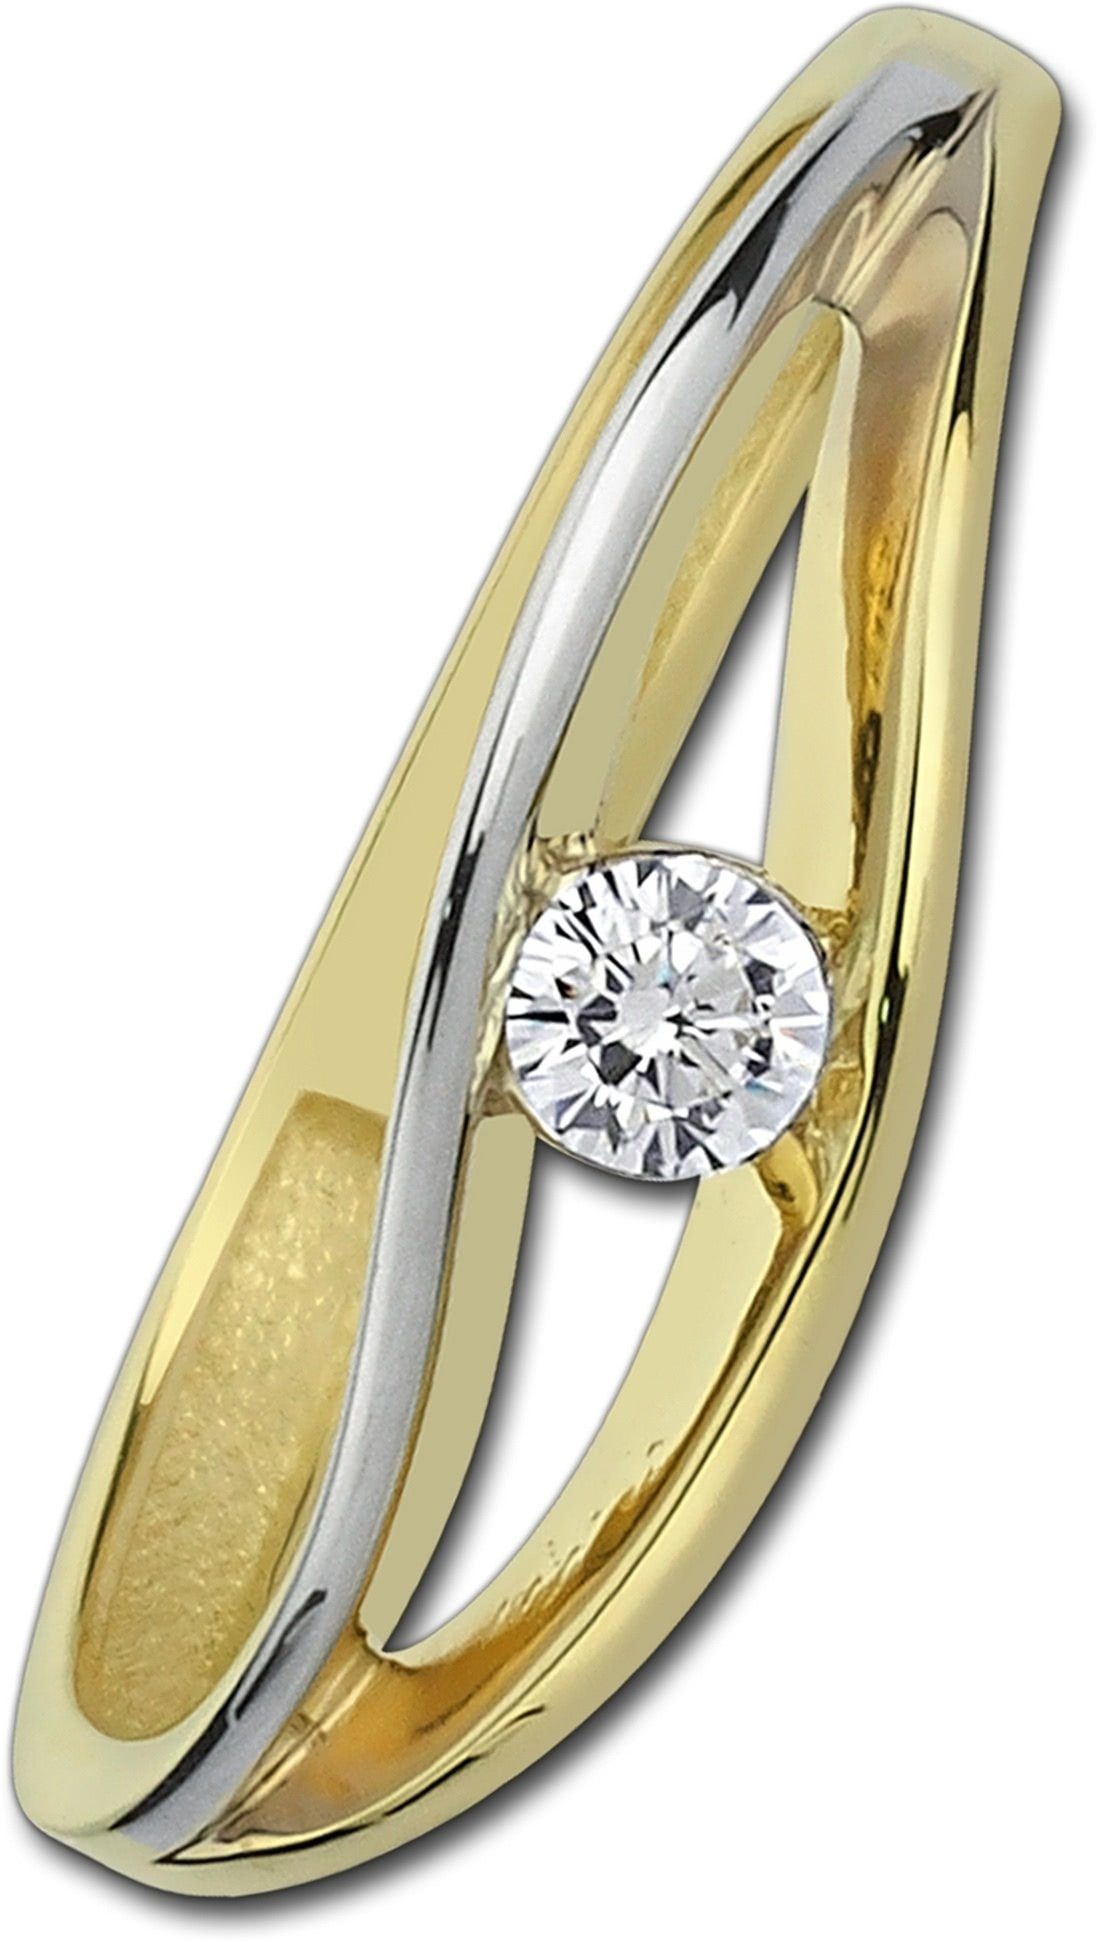 Balia Goldring Balia Damen Ring aus 333 Gelbgold (Fingerring), Fingerring Größe 54 (17,2), 333 Gelbgold - 8 Karat (geschwungen gold)